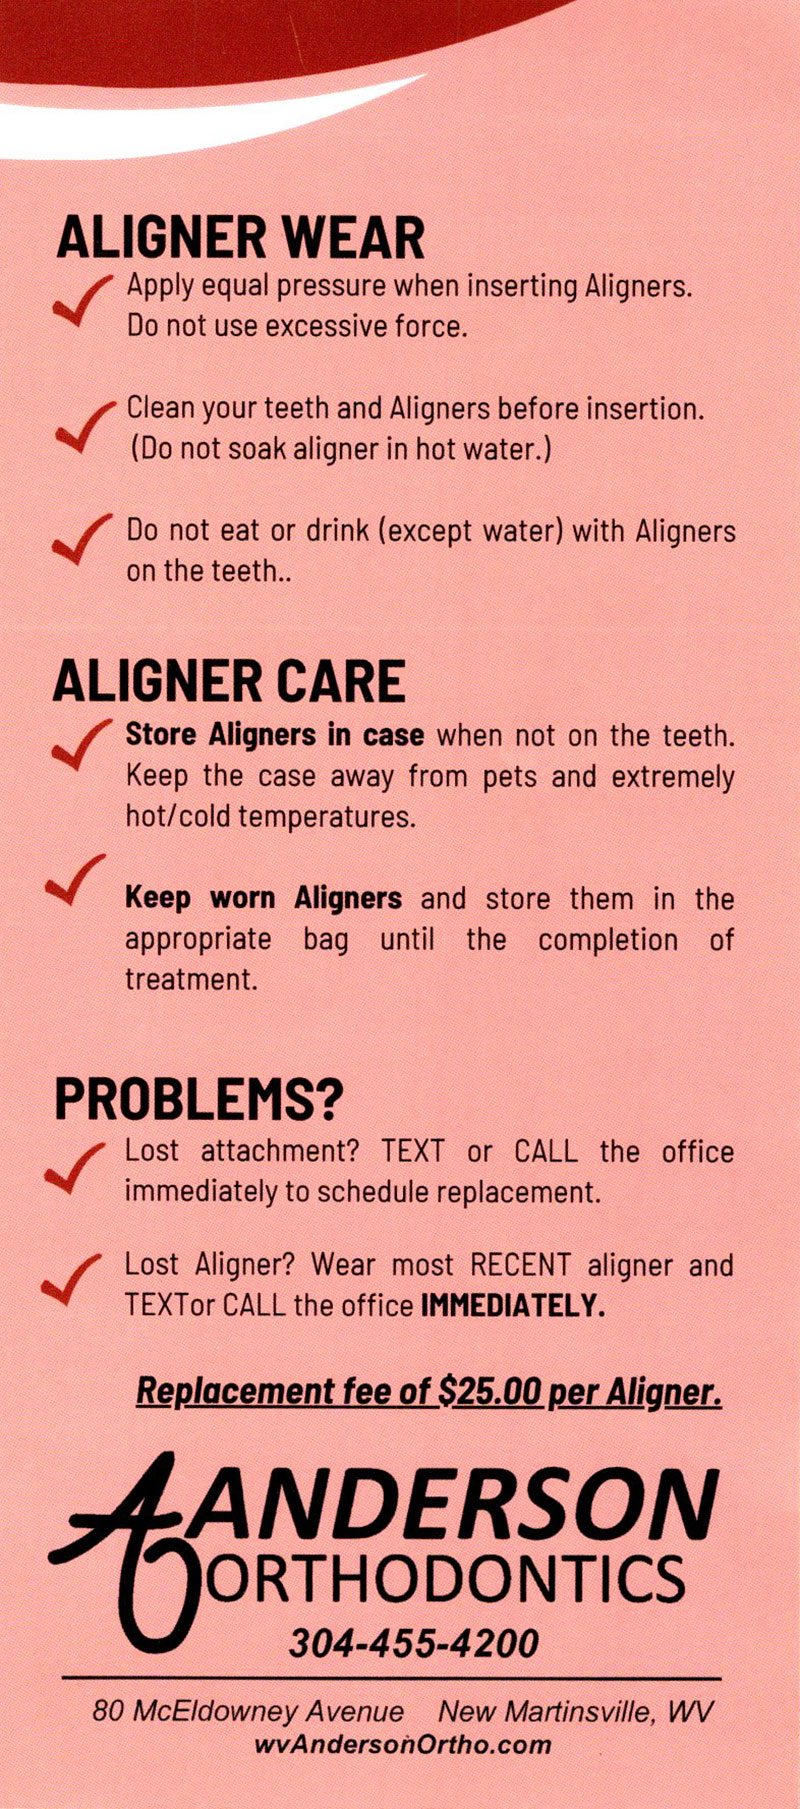 Aligner Instructions photo 2